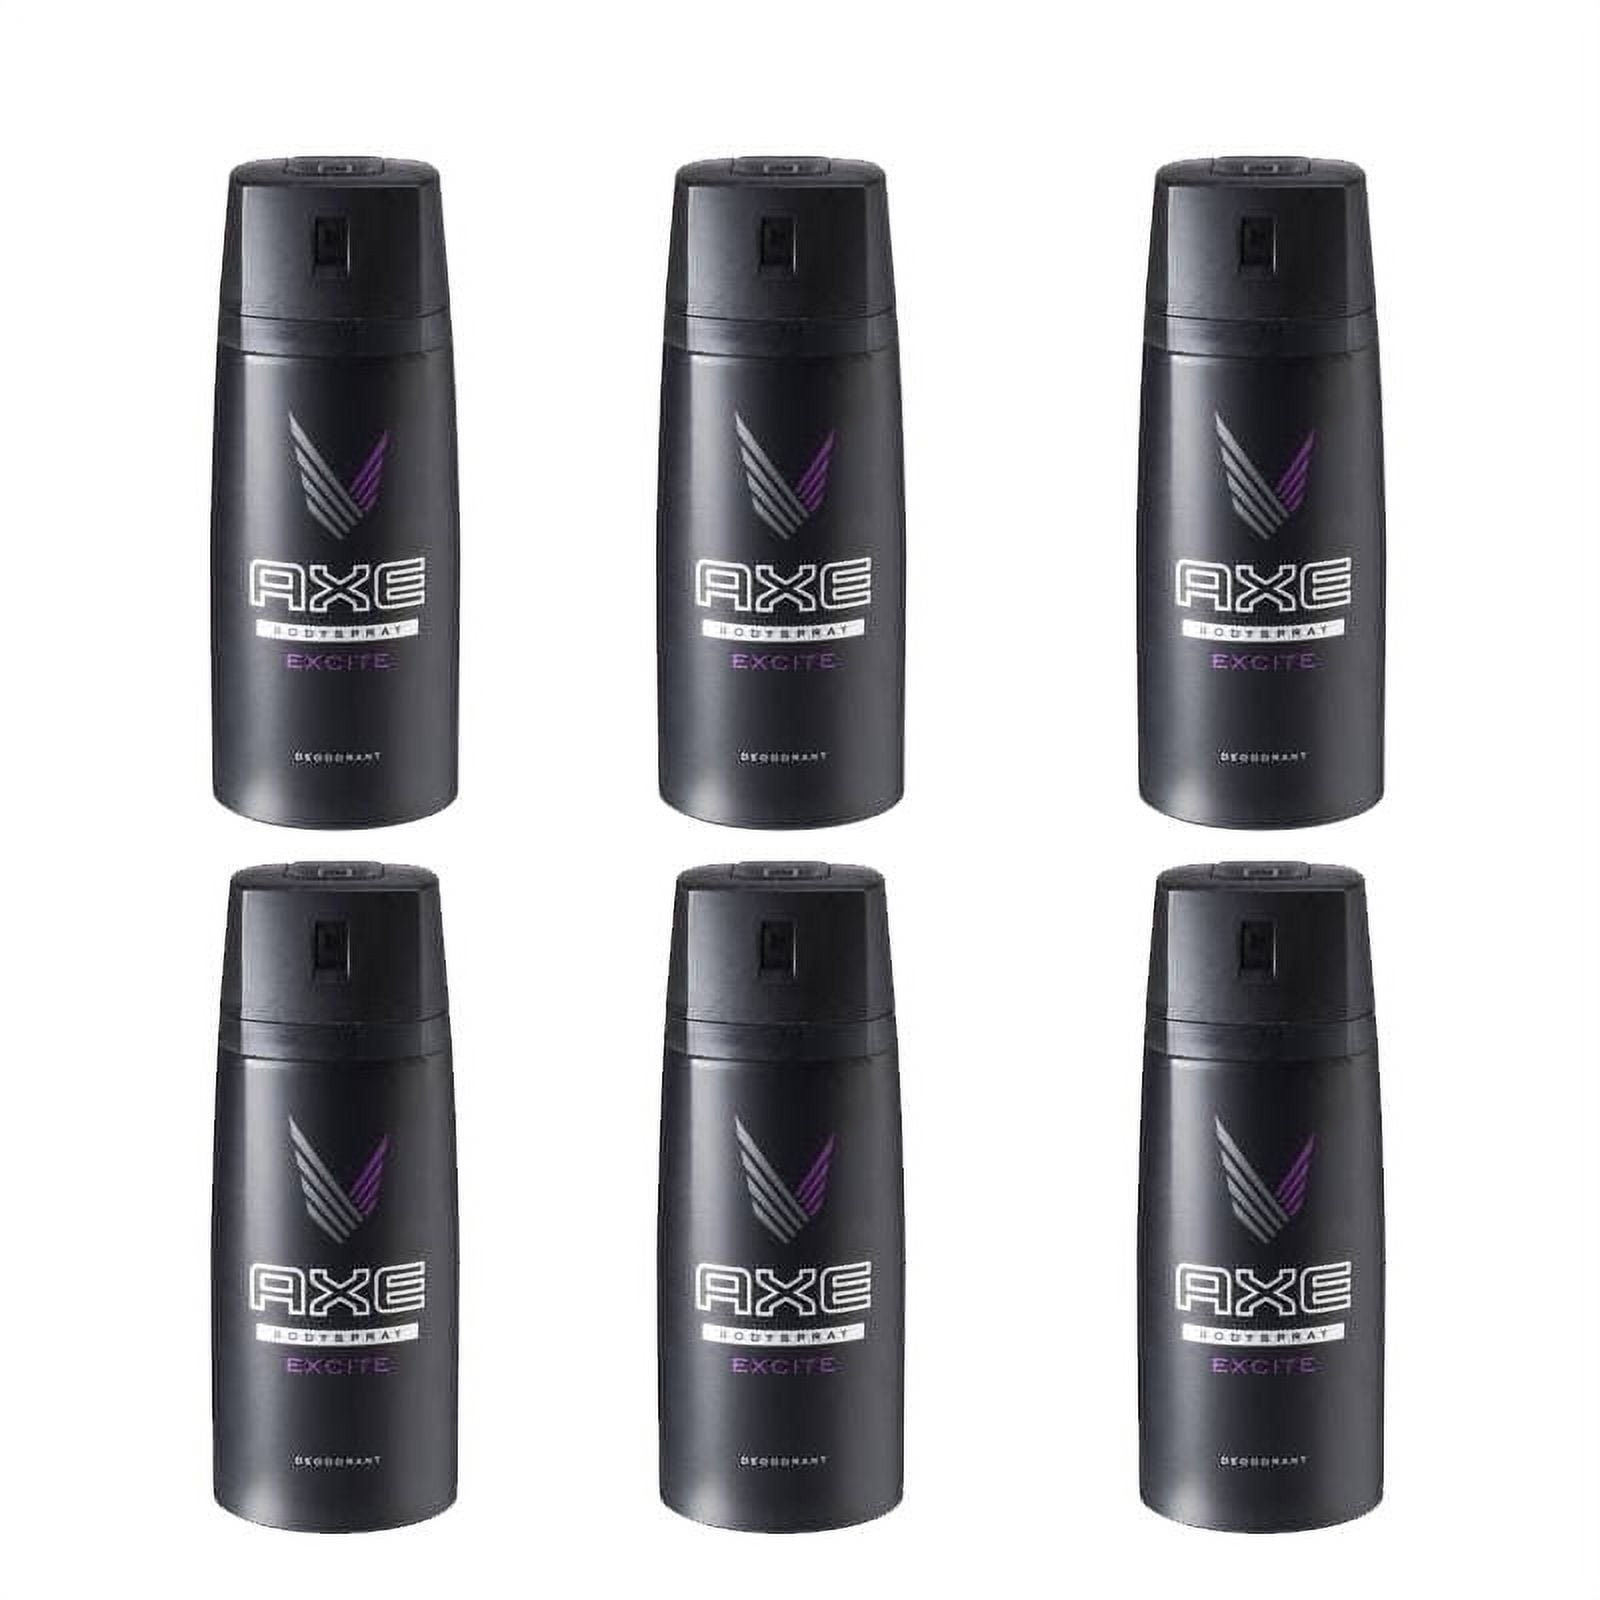 Axe Axe Spray de bodyspray Collision Leather & Cookies sans sel  d'aluminium, 150 ml : : Beauté et Parfum